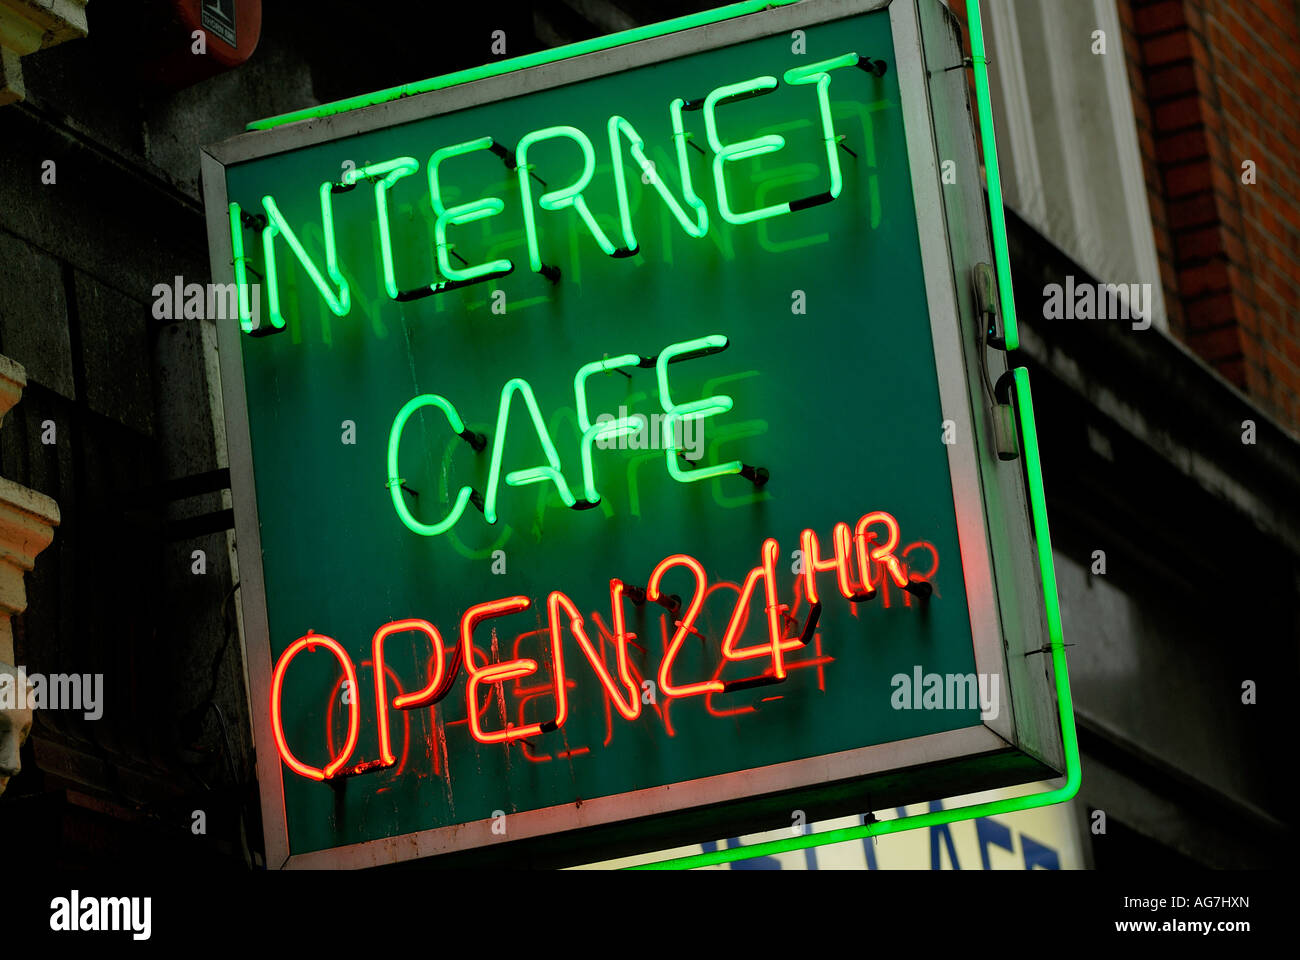 internet cafe neon sign, london, england Stock Photo